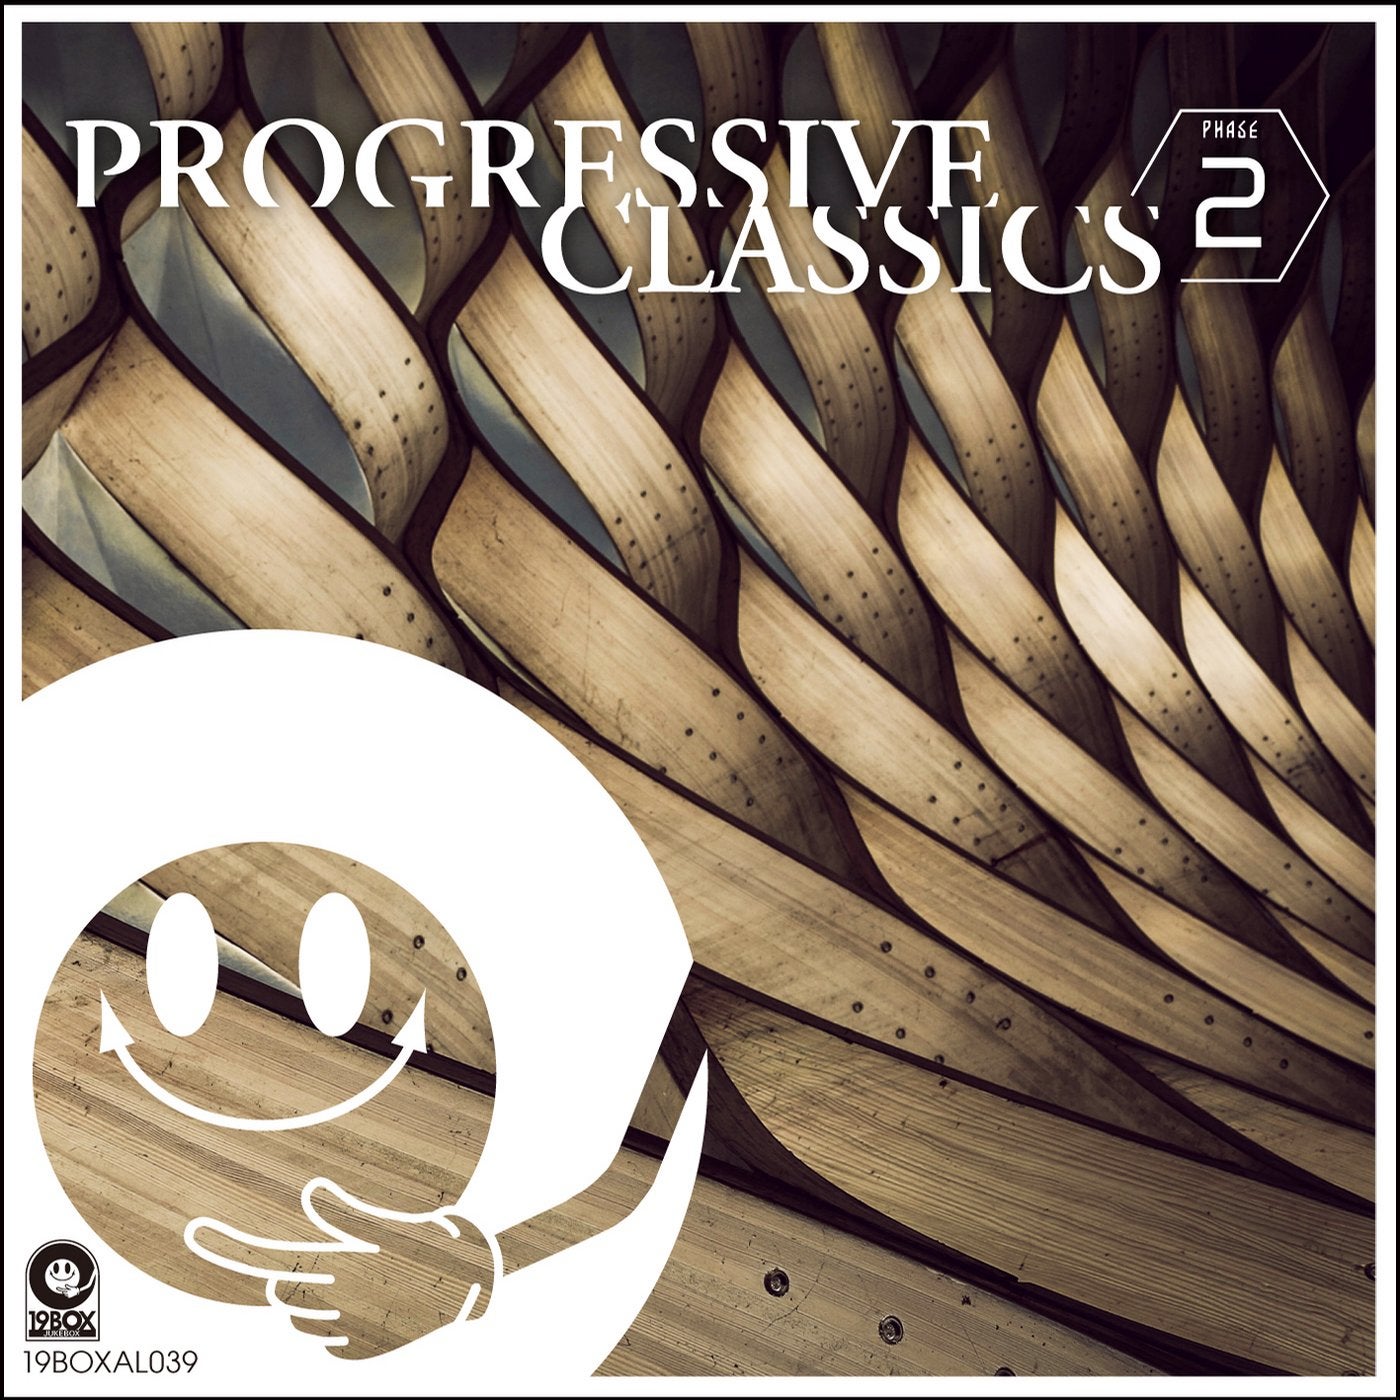 Progressive Classics Phase 2